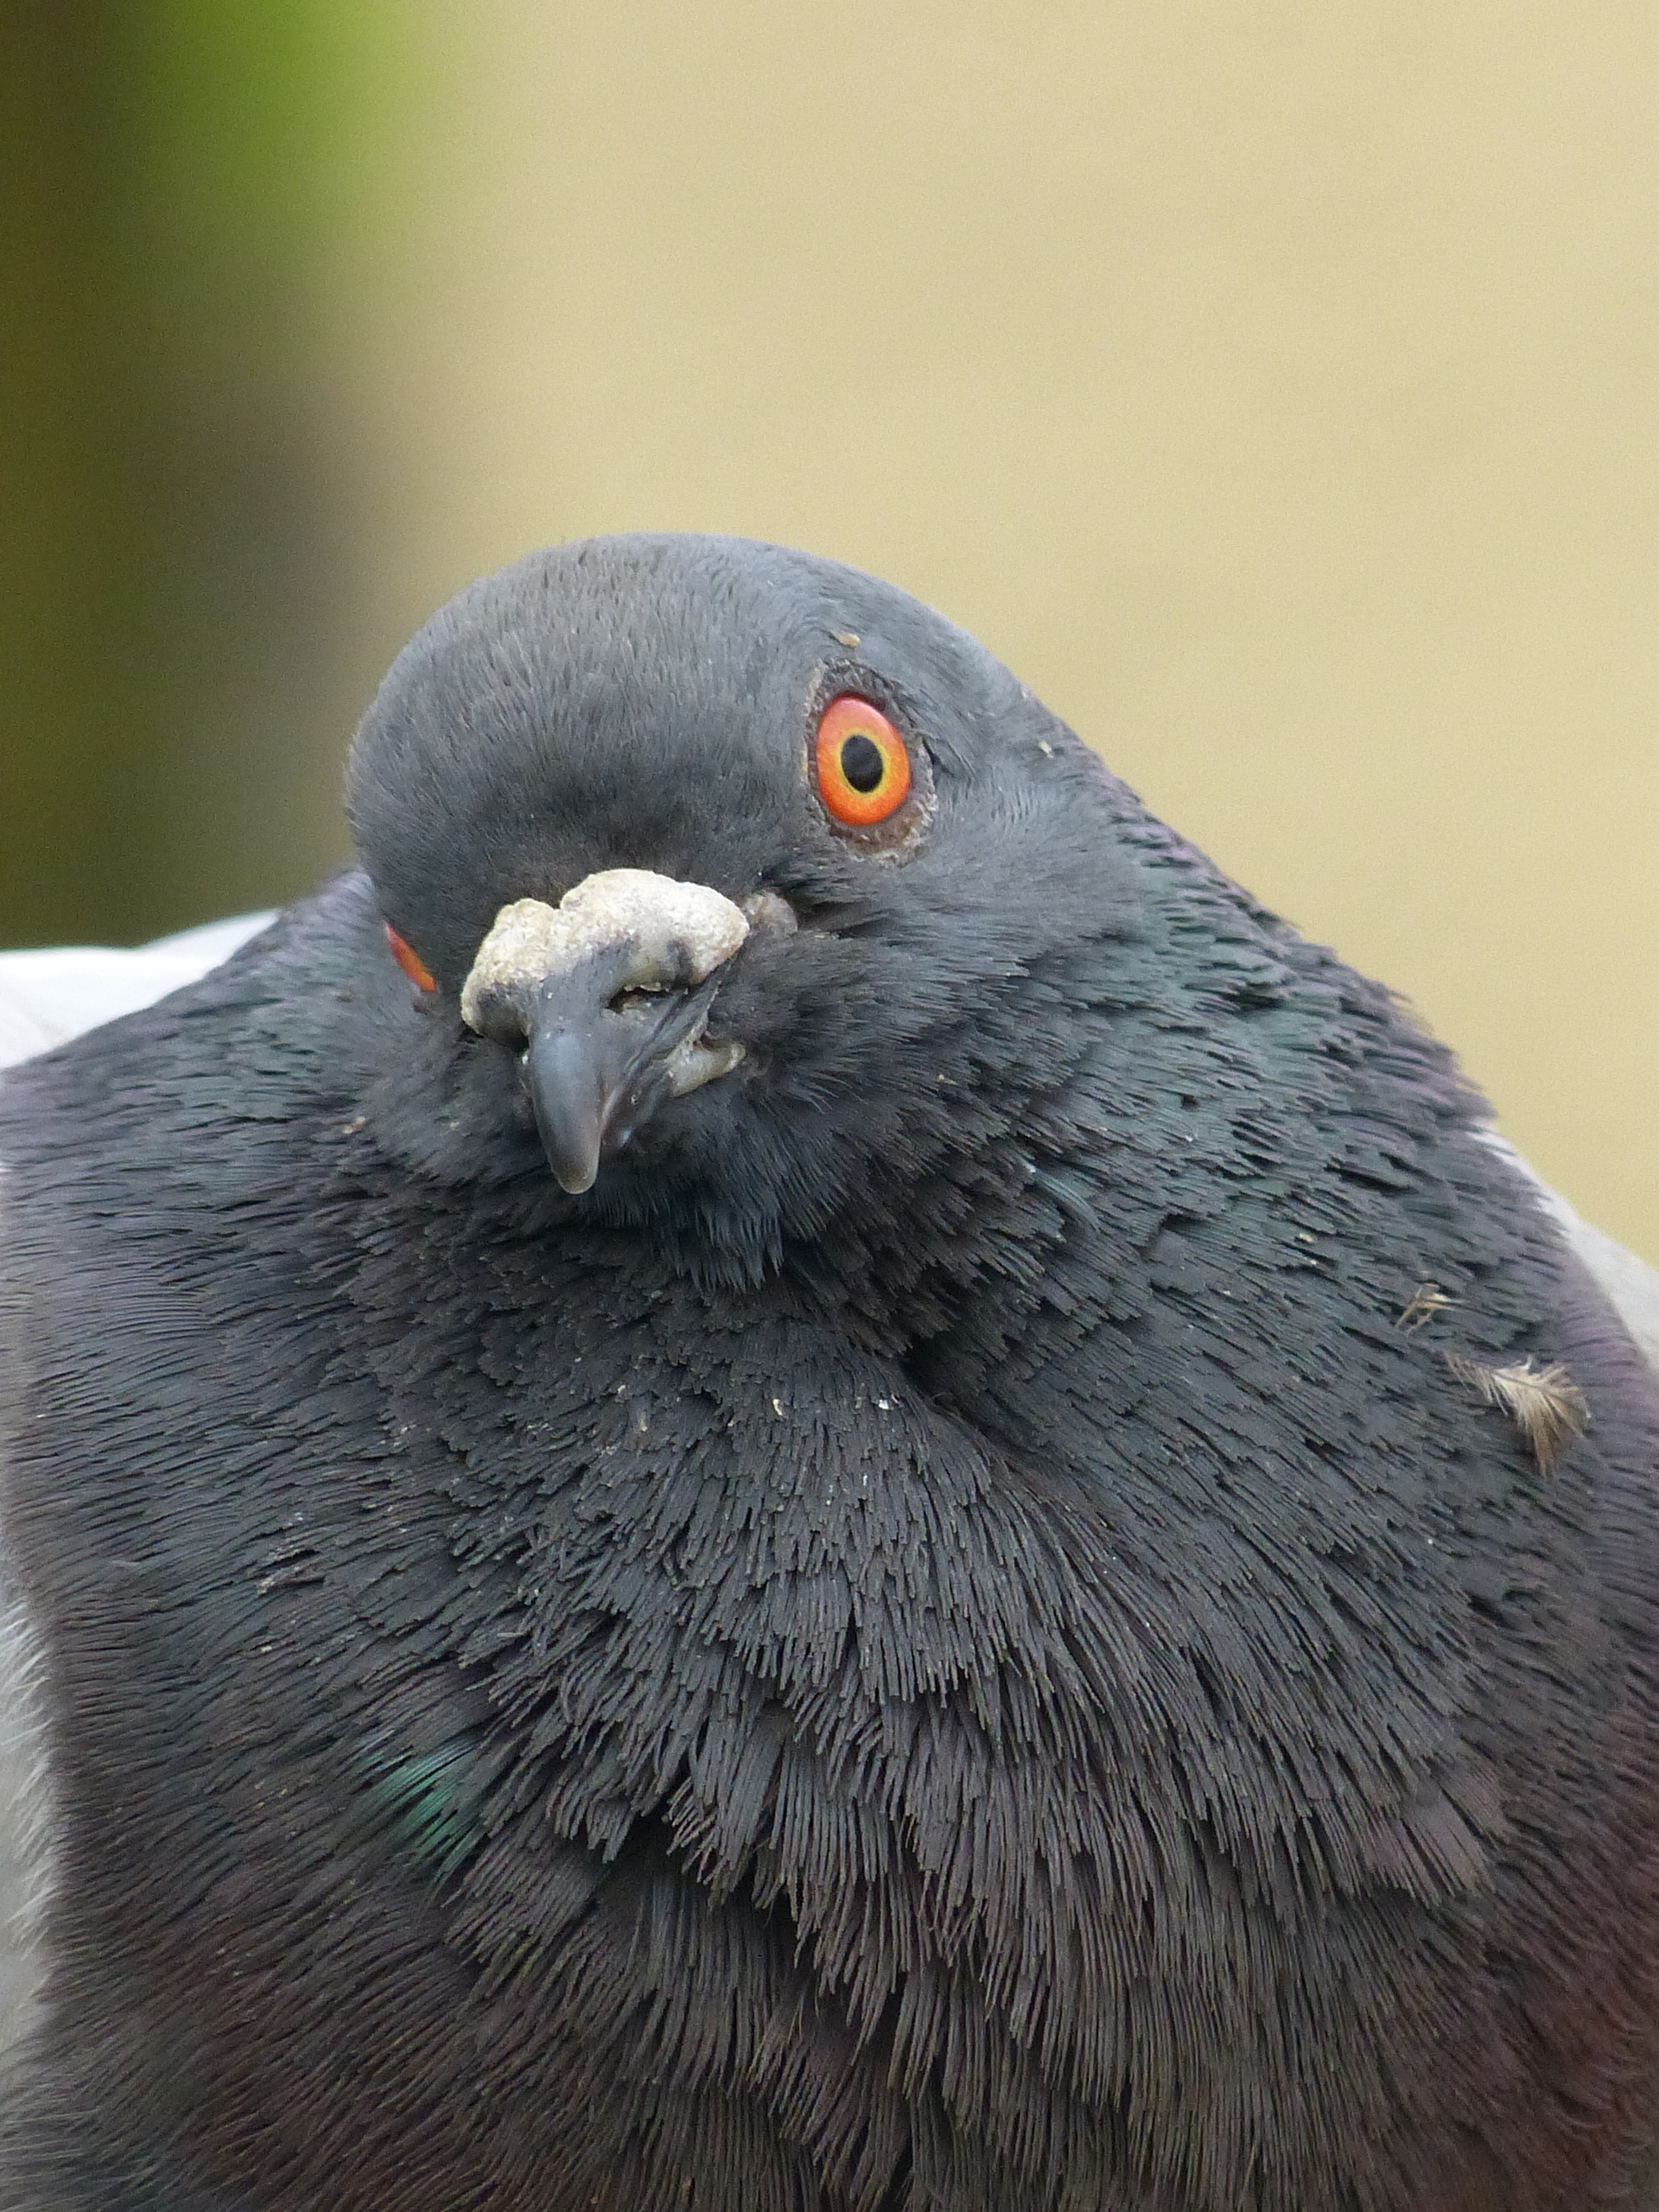 File:Feral Pigeon (7475134804).jpg - Wikimedia Commons